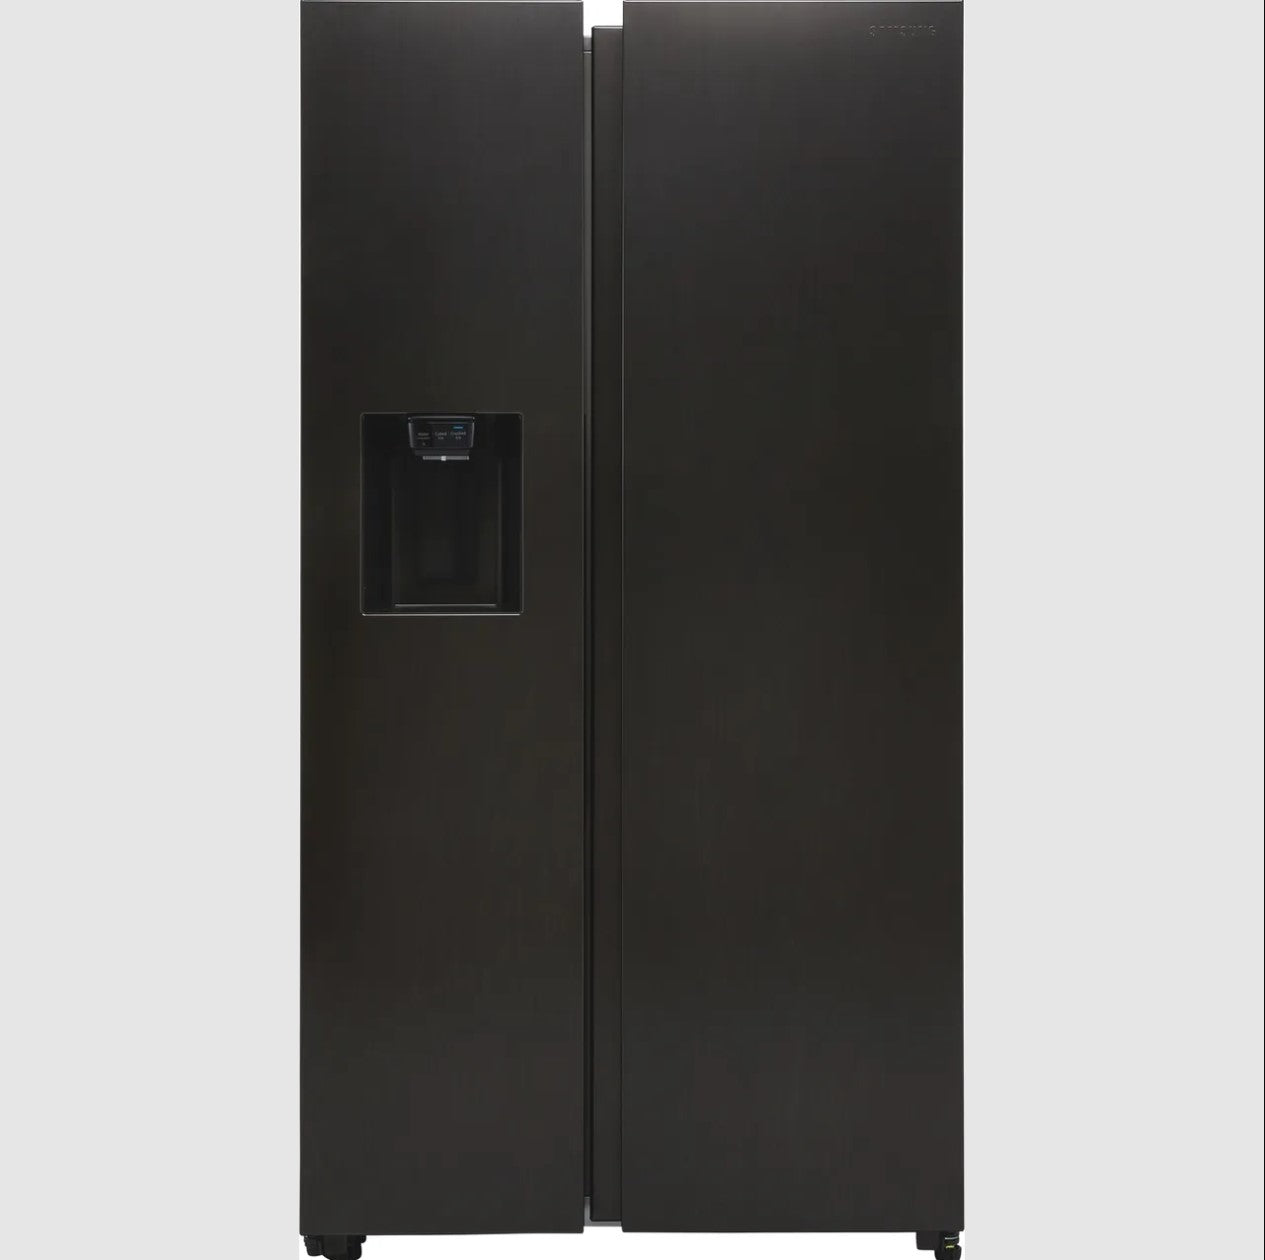 Samsung RS68A8830B1 Fridge Freezer American in Black Steel REFURBISHED